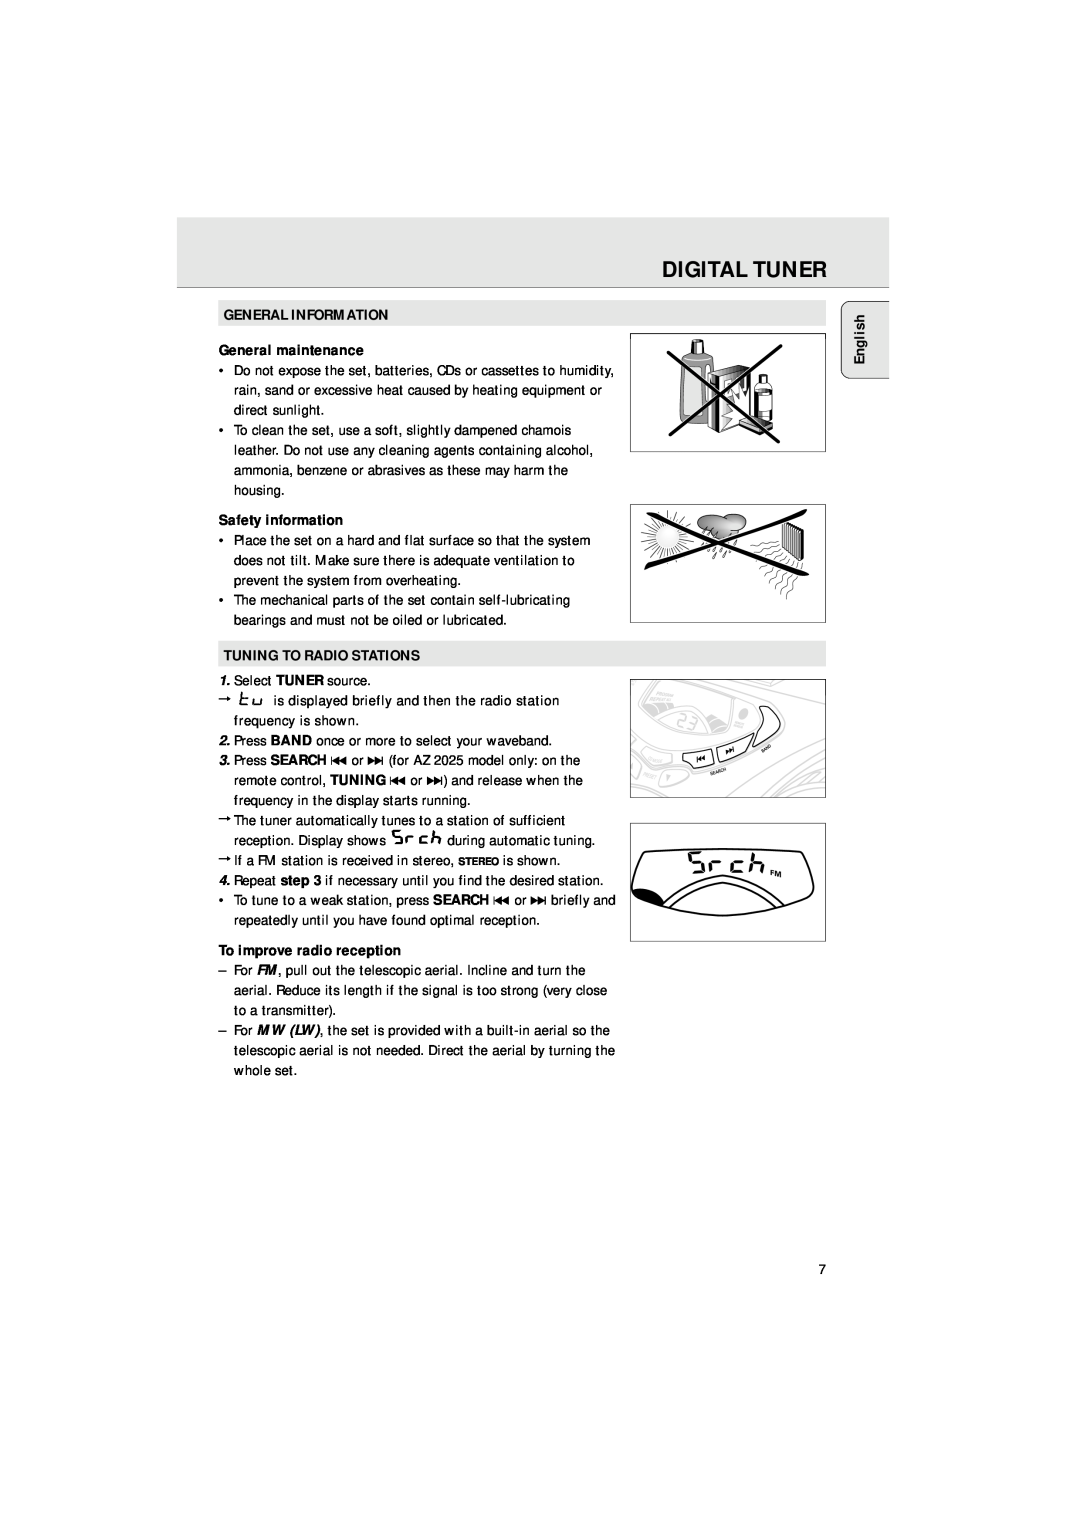 Philips AZ 2020 manual Digital Tuner, GENERAL INFORMATION General maintenance, Safety information, Tuning To Radio Stations 